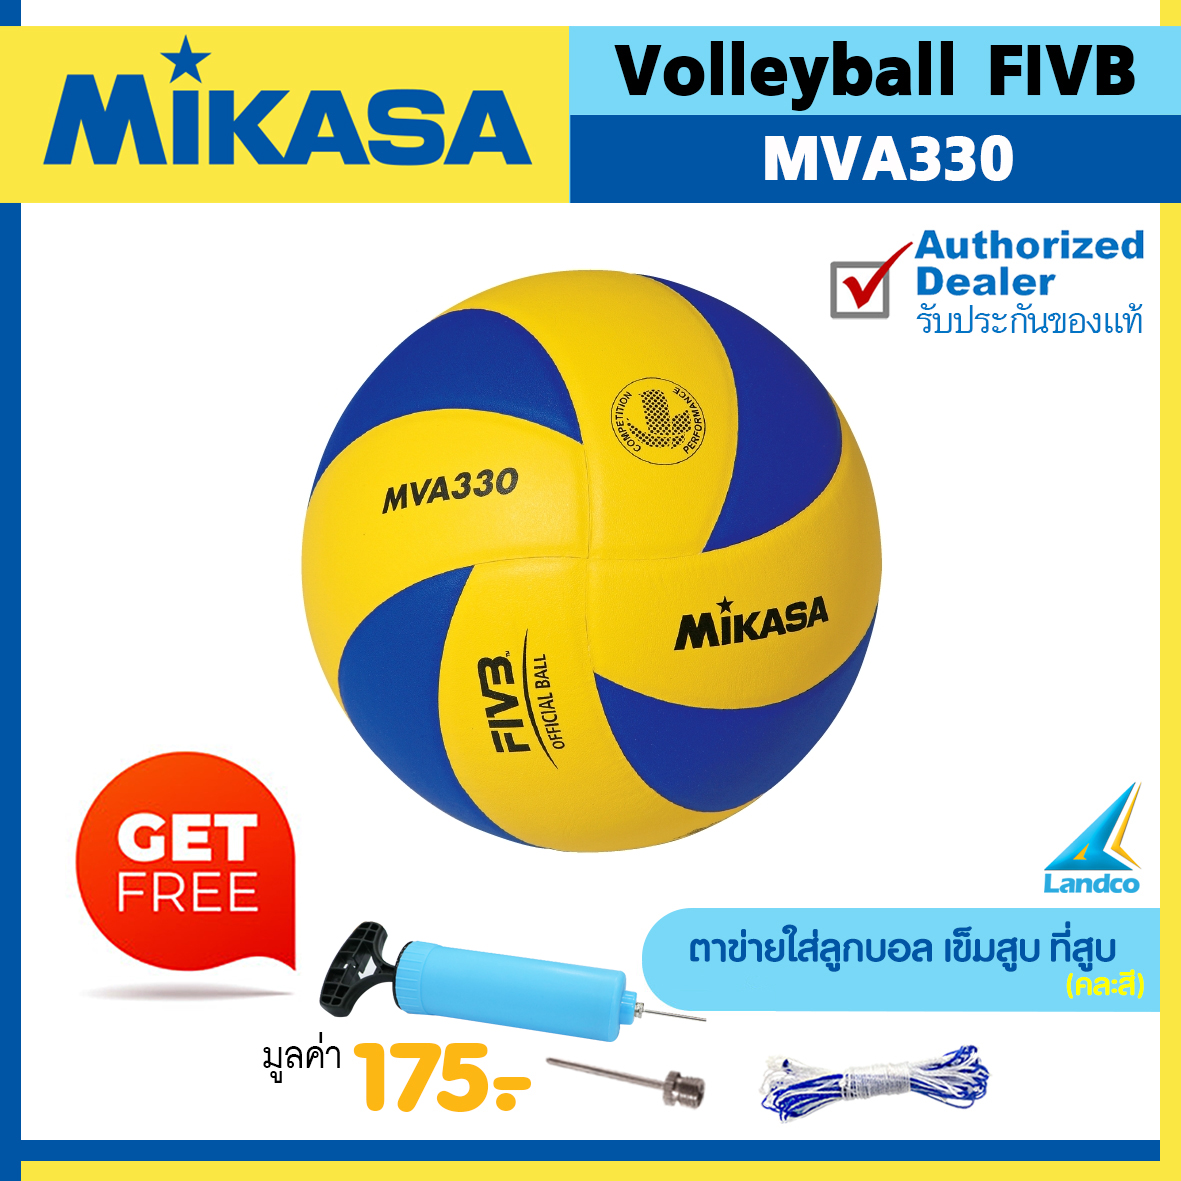 MIKASA ลูกวอลเลย์บอลหนังอัด Volleyball MVA200 / MVA300 / MVA310 / MVA330 FIVB เบอร์ 5 (แถมฟรี ตาข่ายใส่ลูกบอล + เข็มสูบ + สูบลมมือ SPL)